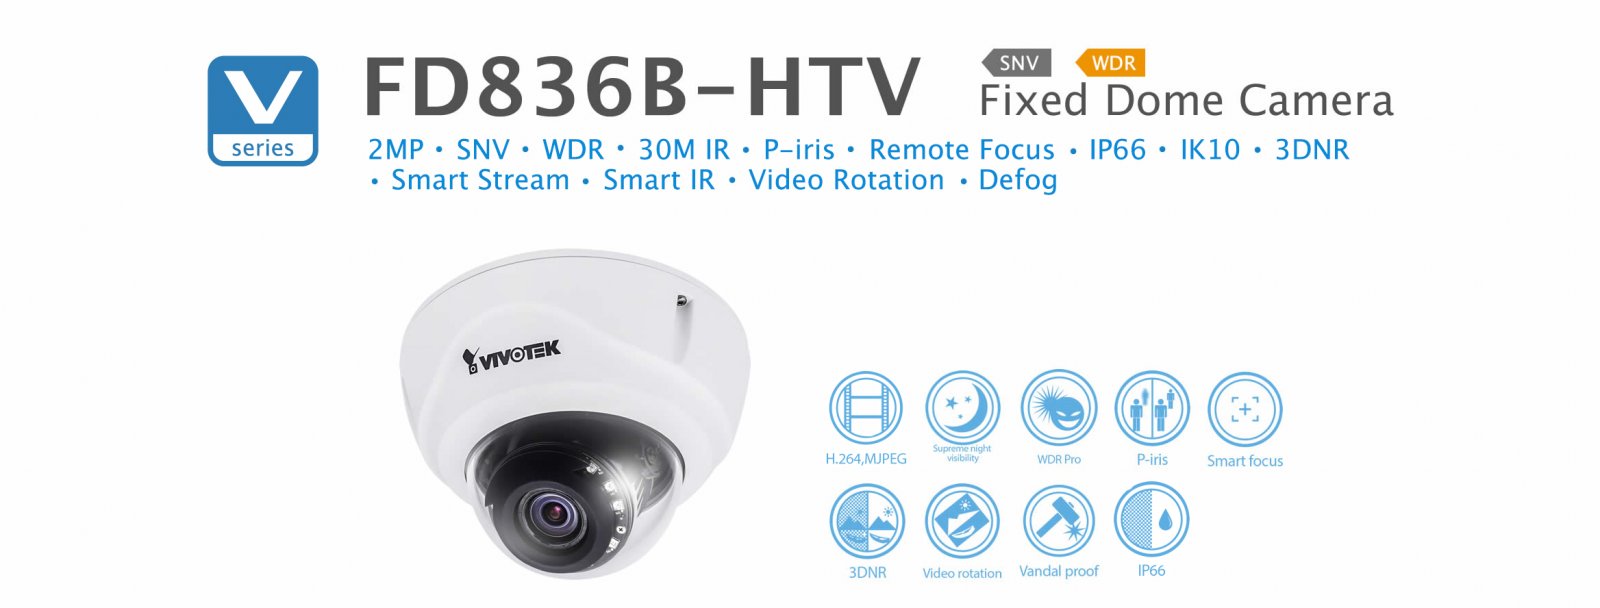 FD836B-HTV. Vivotek Fixed Dome Camera